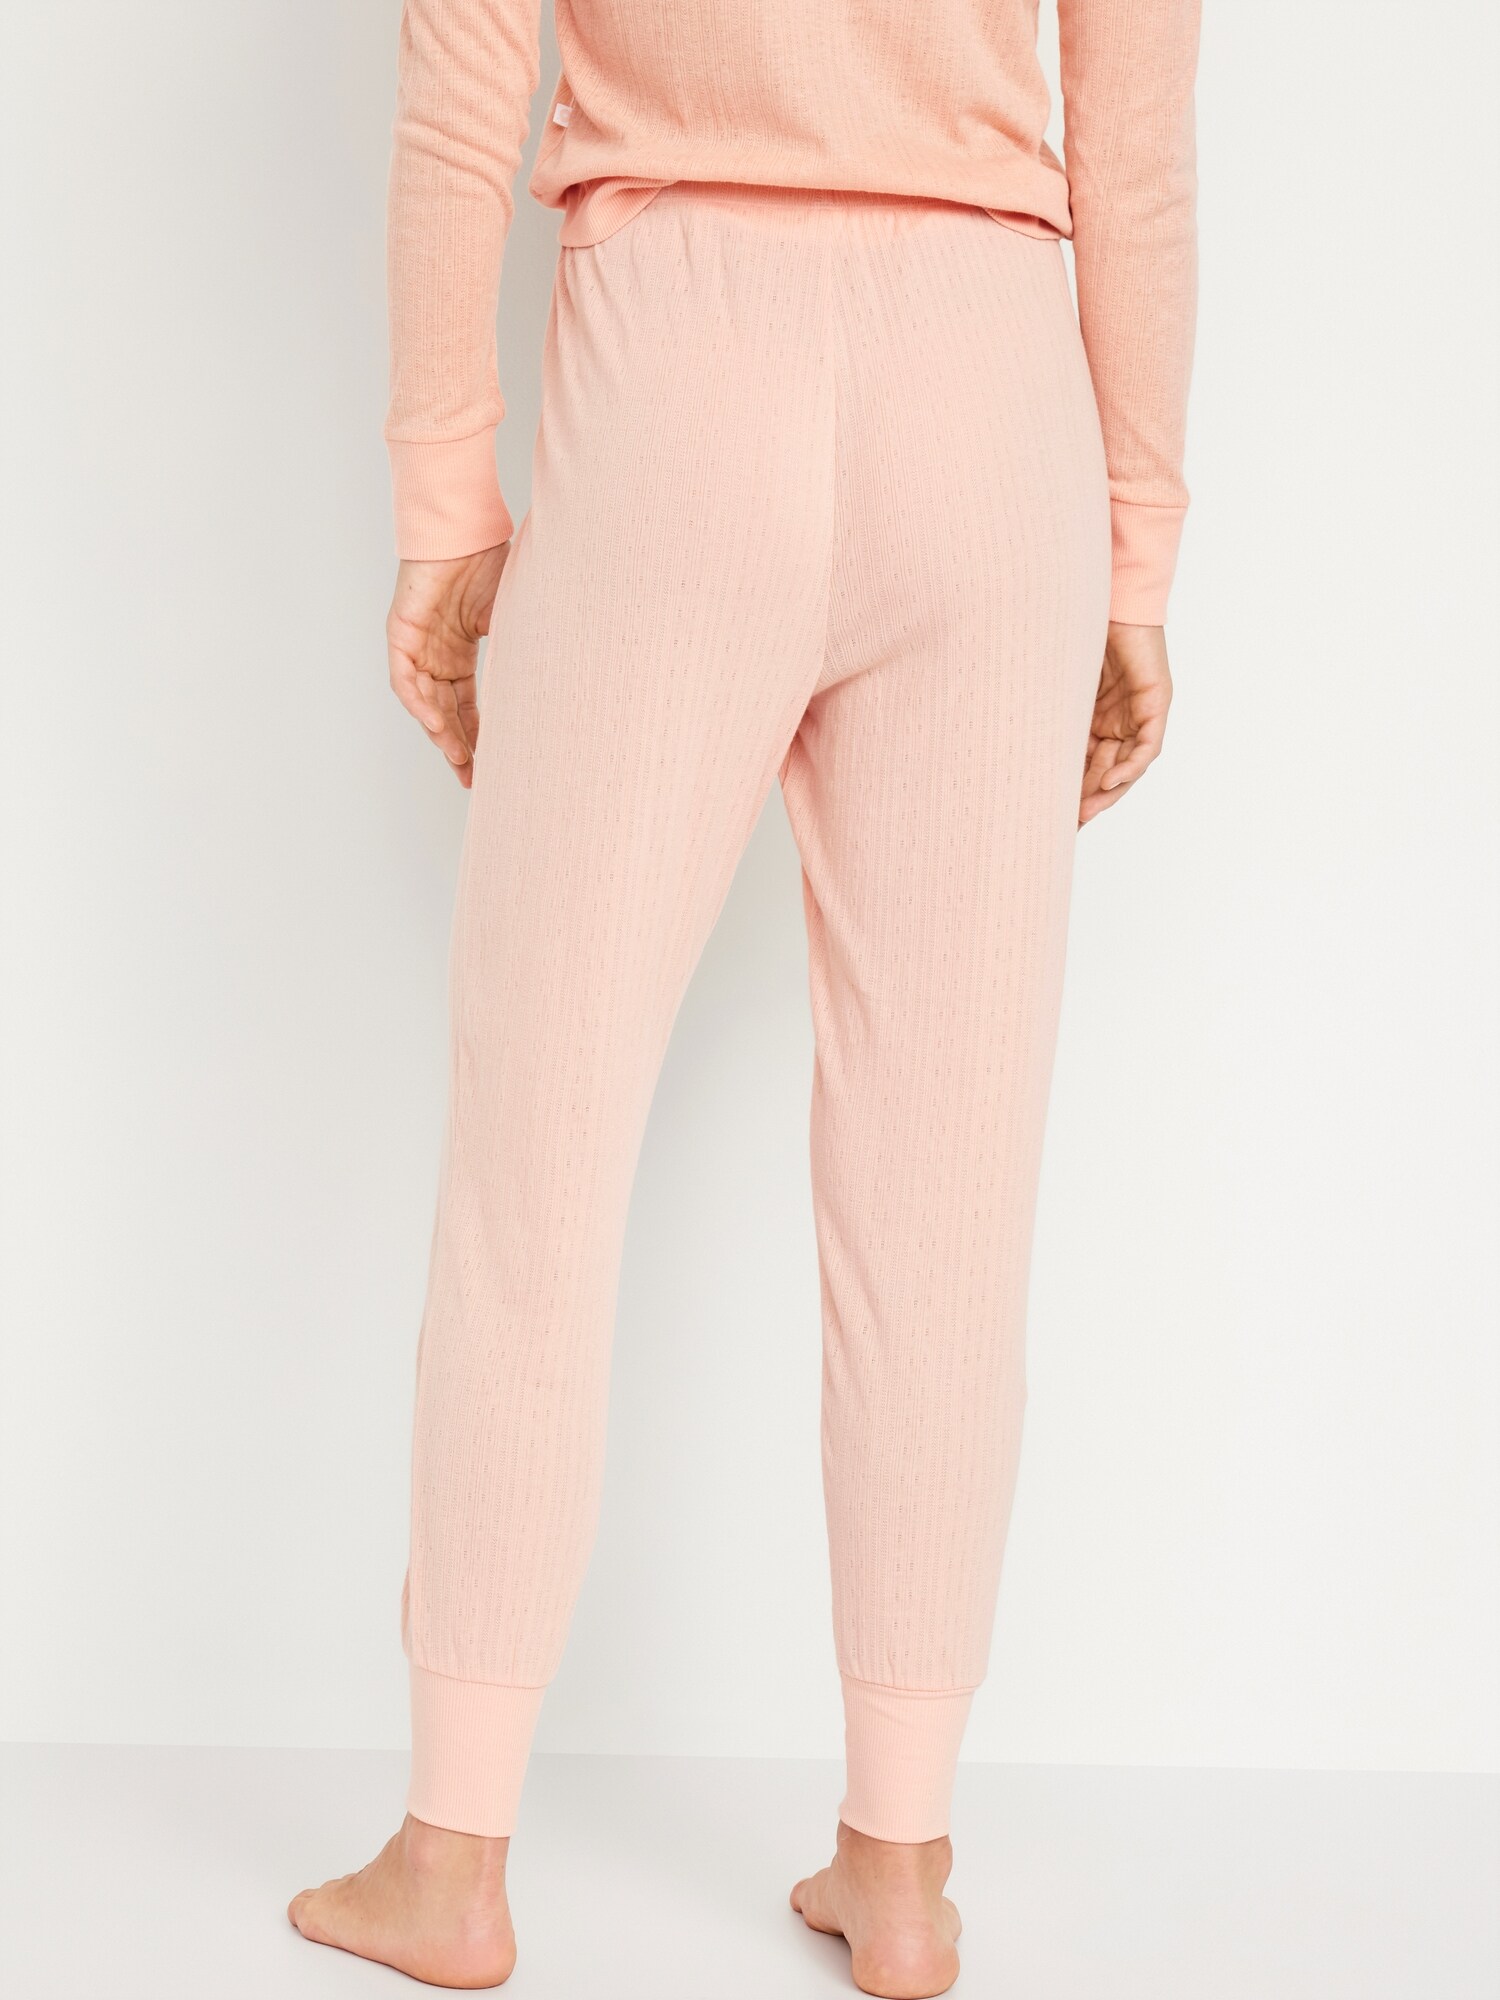 Pink Seersucker ~ Cotton Lounge Pants - Needham Lane Ltd.